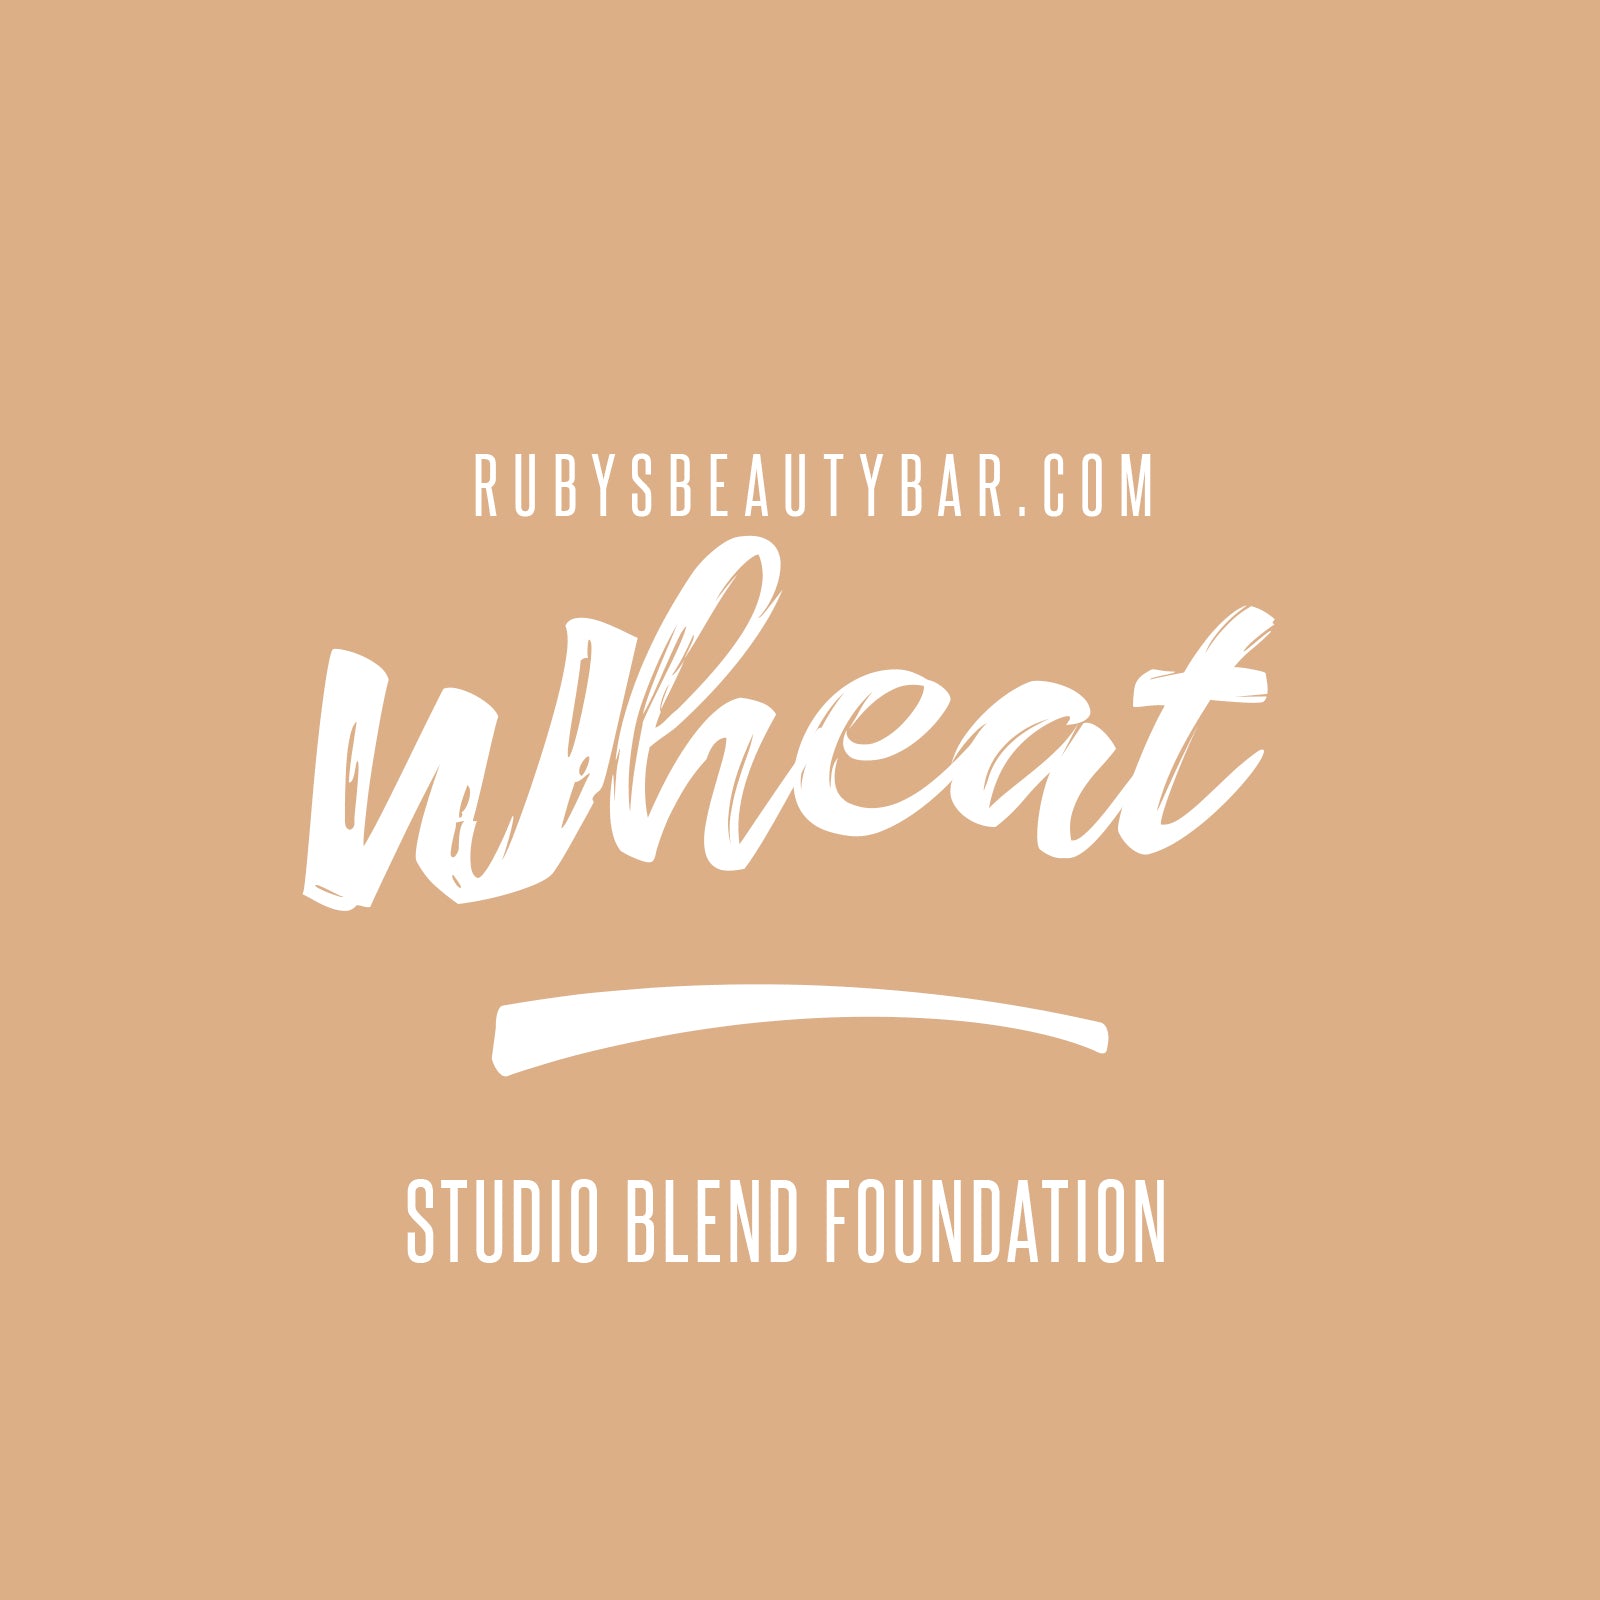 Wheat Studio Blend Foundation - rubybeautycle